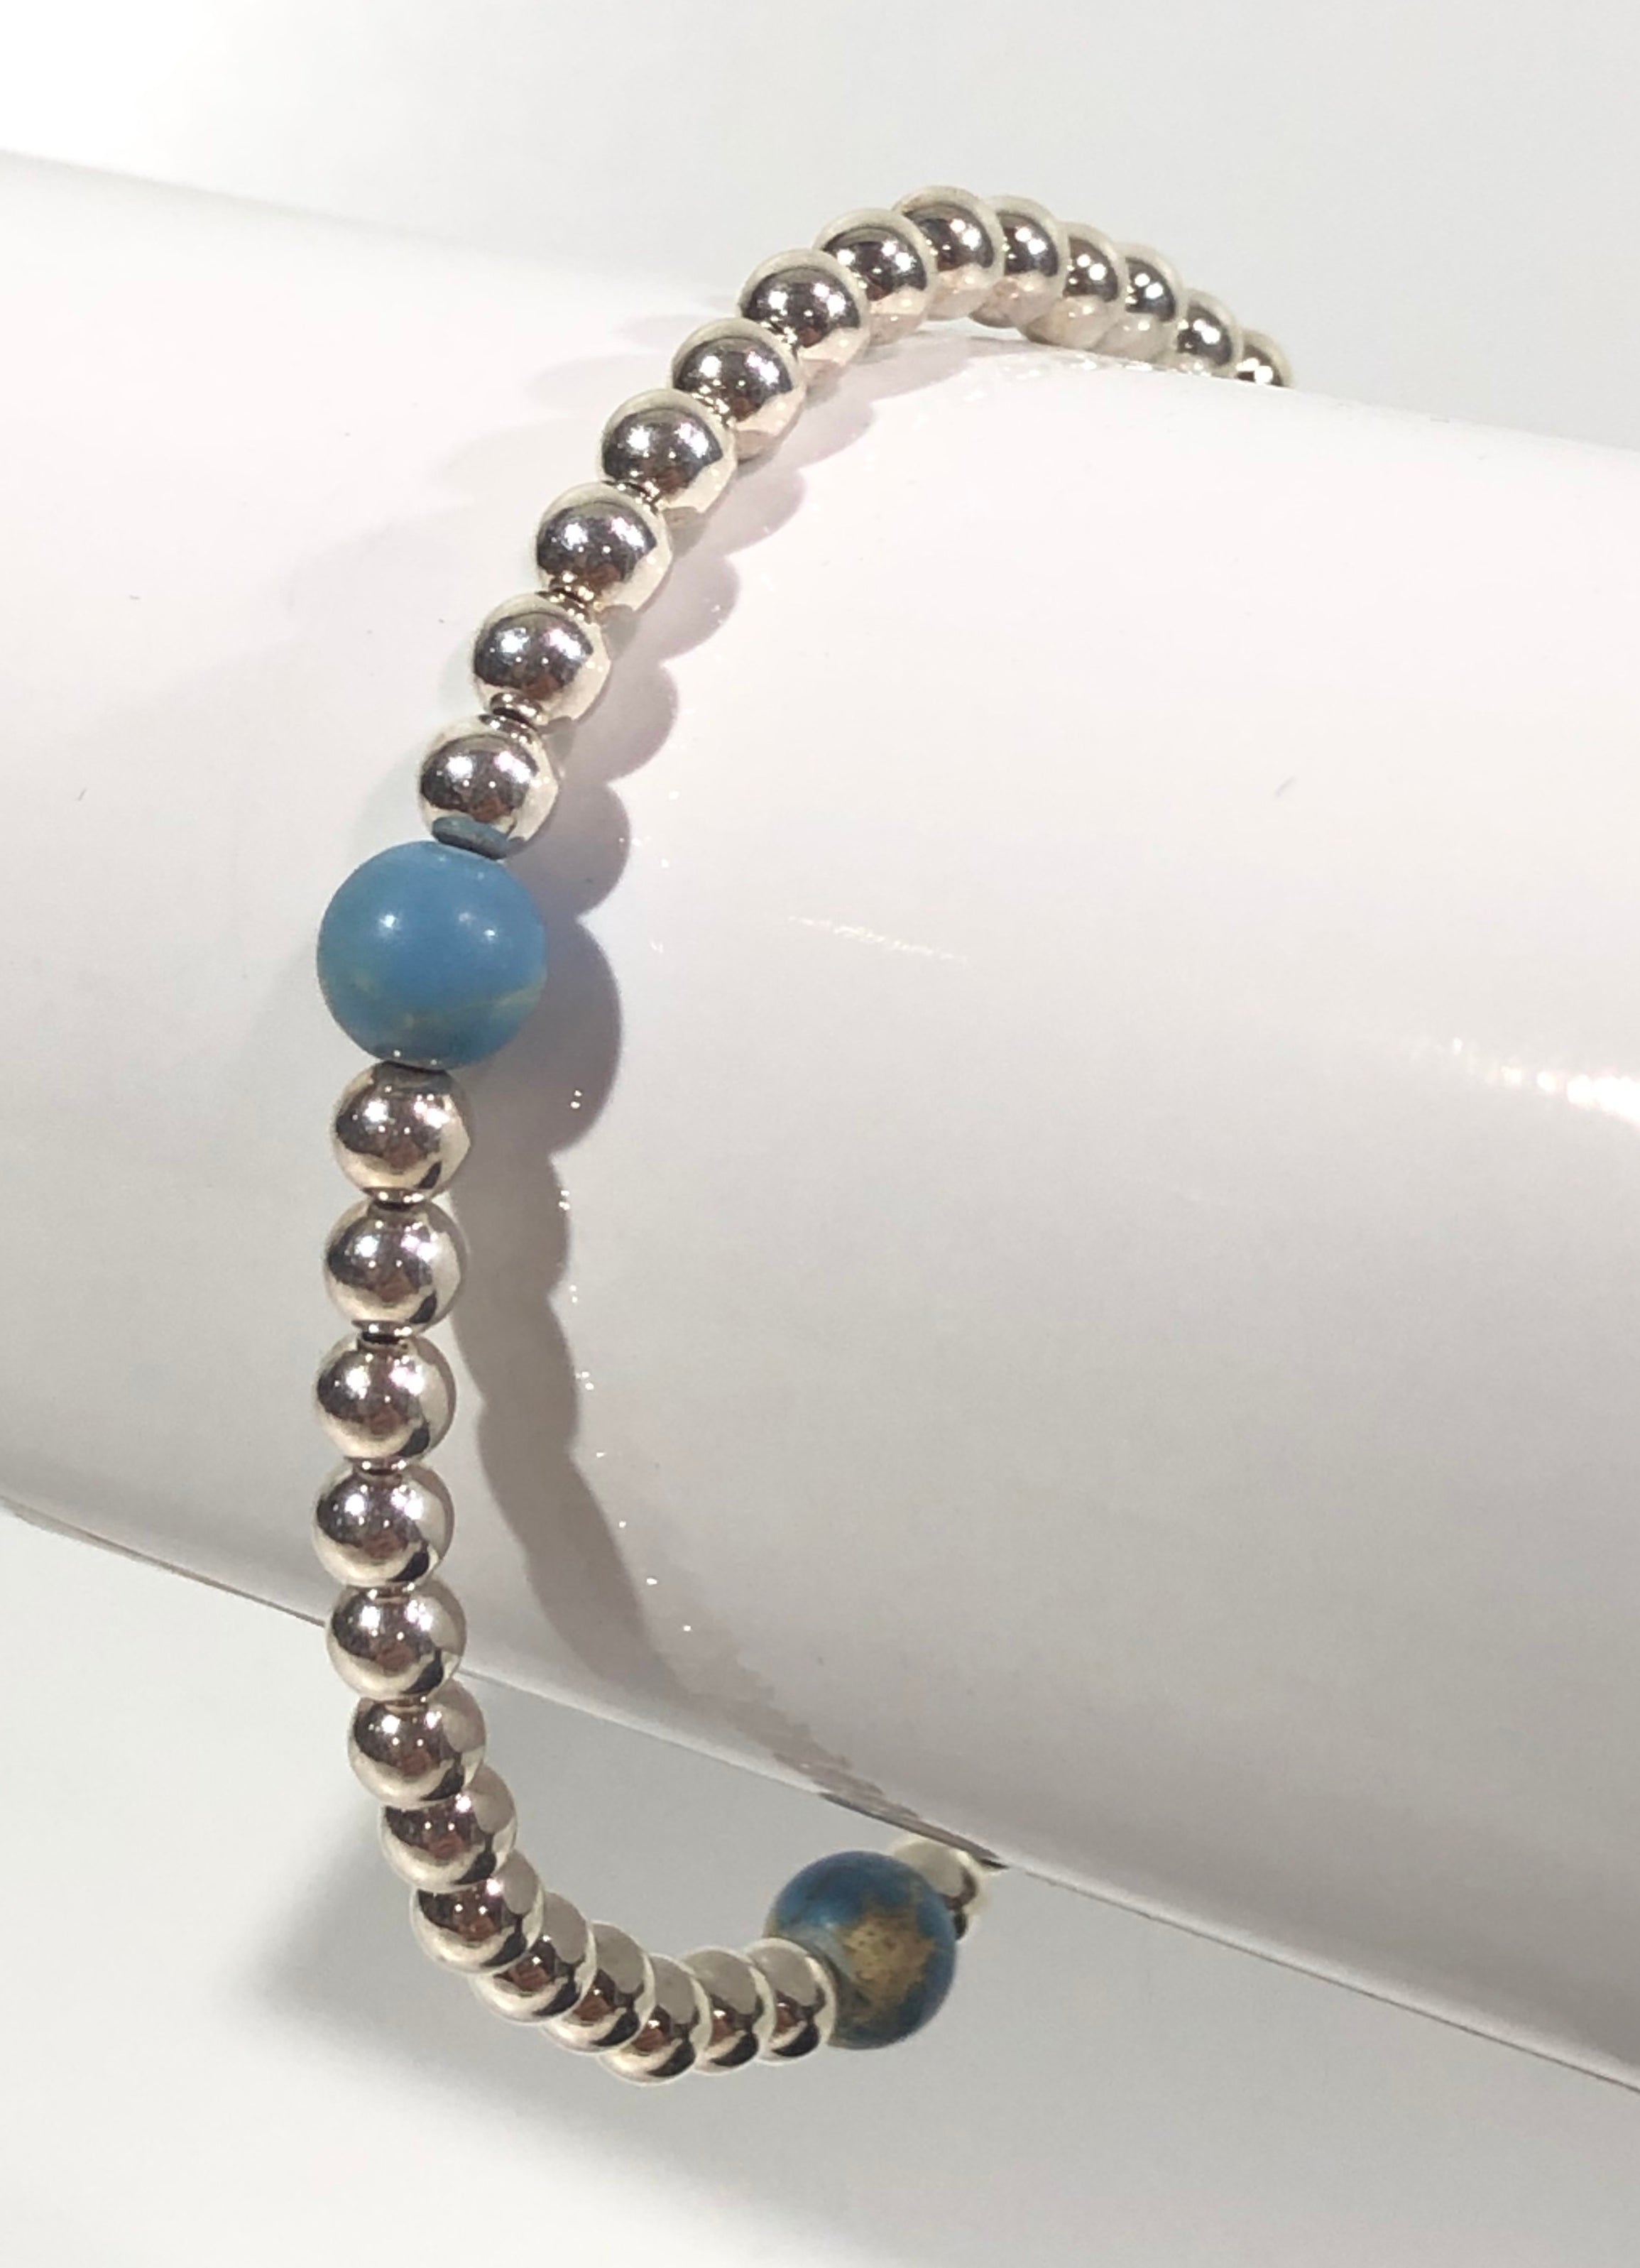 4mm Sterling Silver Bracelet with Jasper Blue Beads